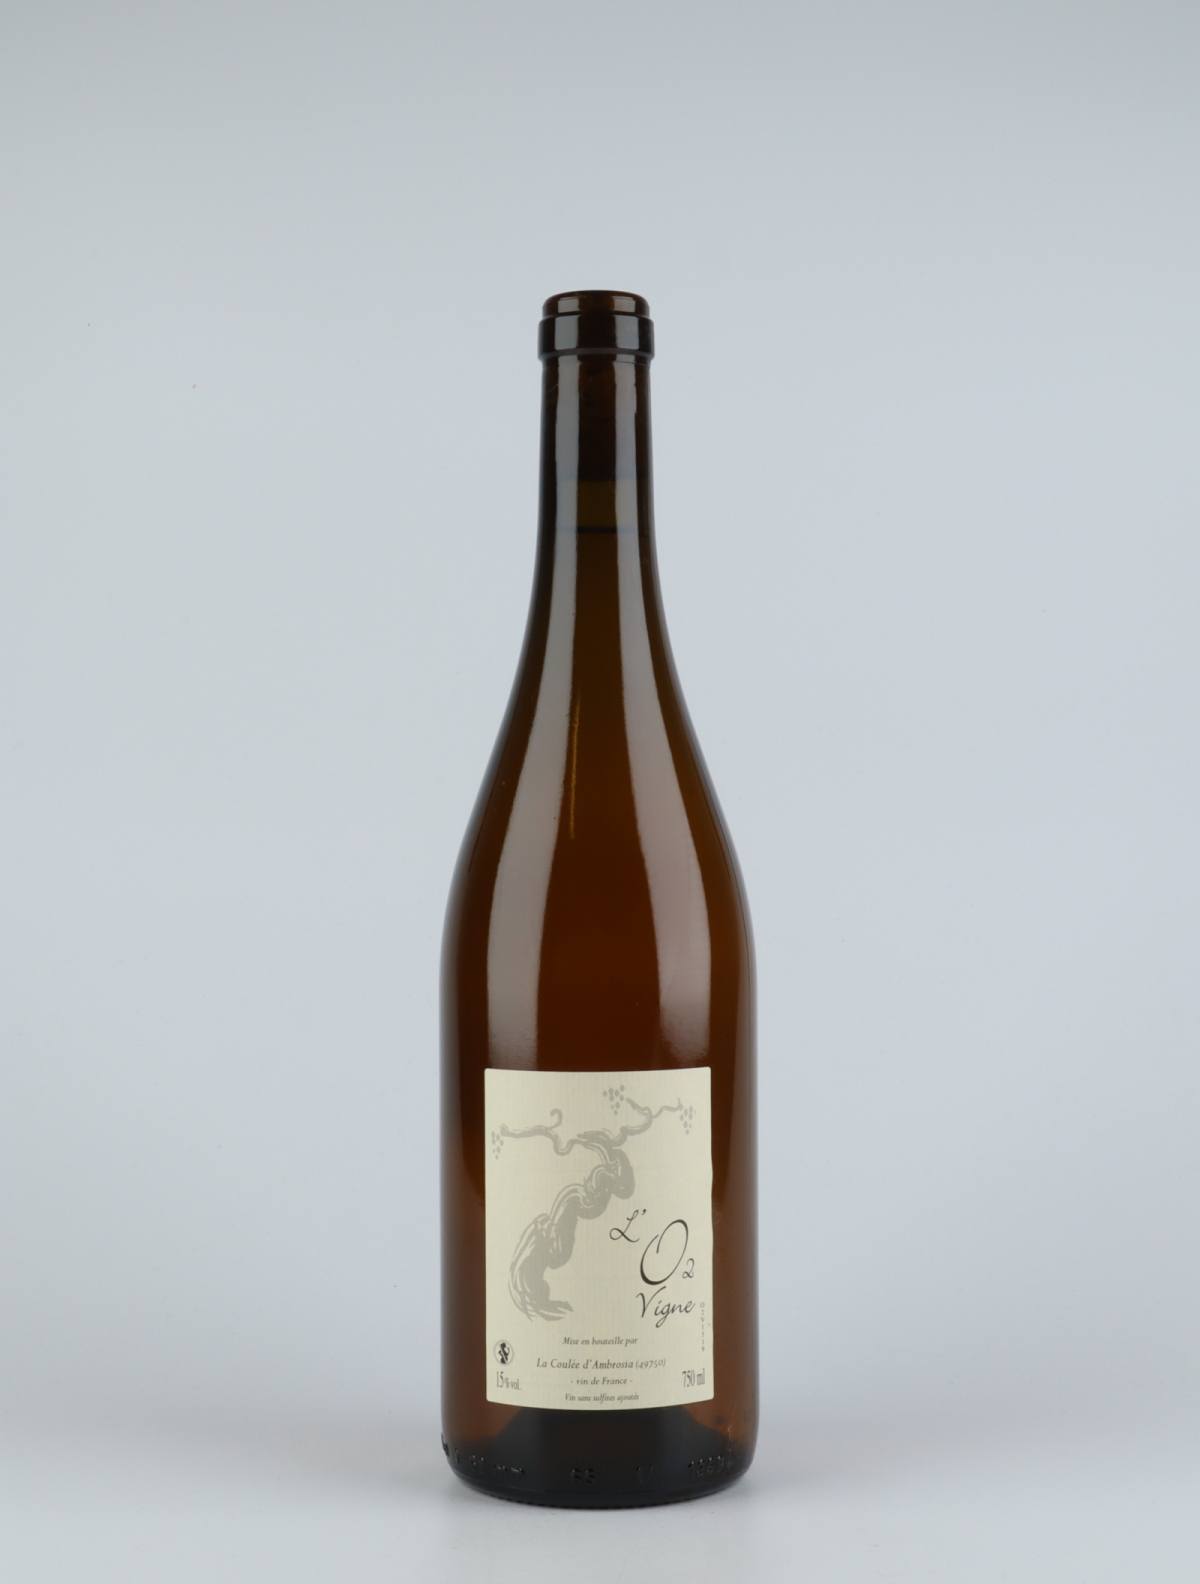 A bottle 2015 O2 Vigne White wine from Jean-Francois Chene, Loire in France